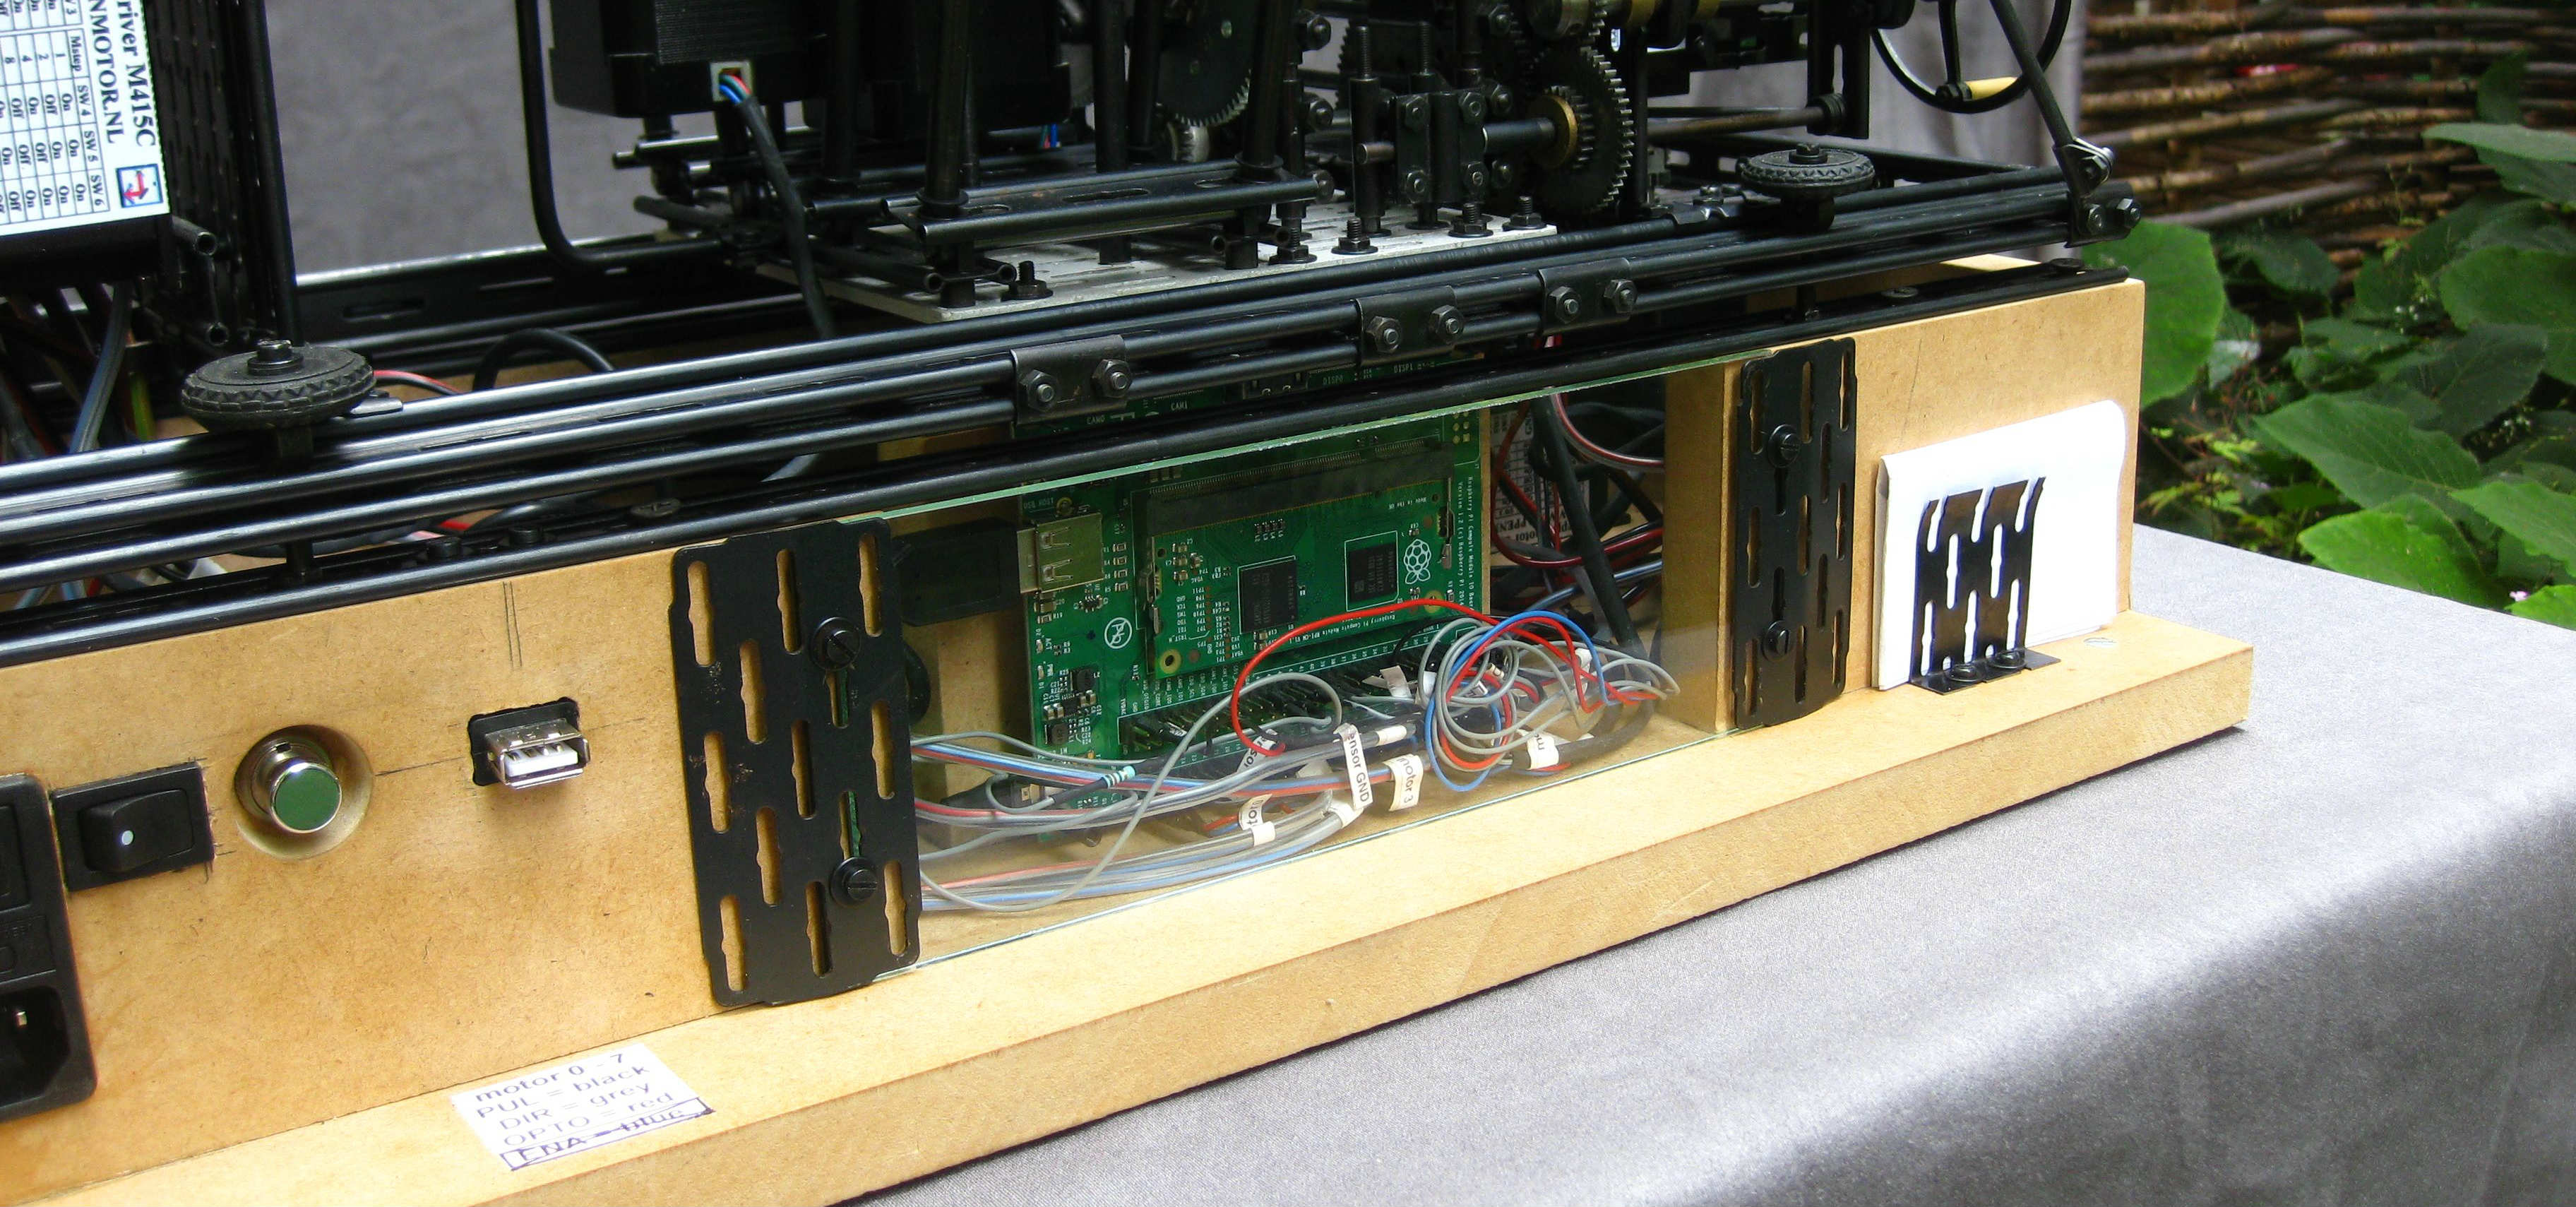 Raspberry Pi mounted on the machine